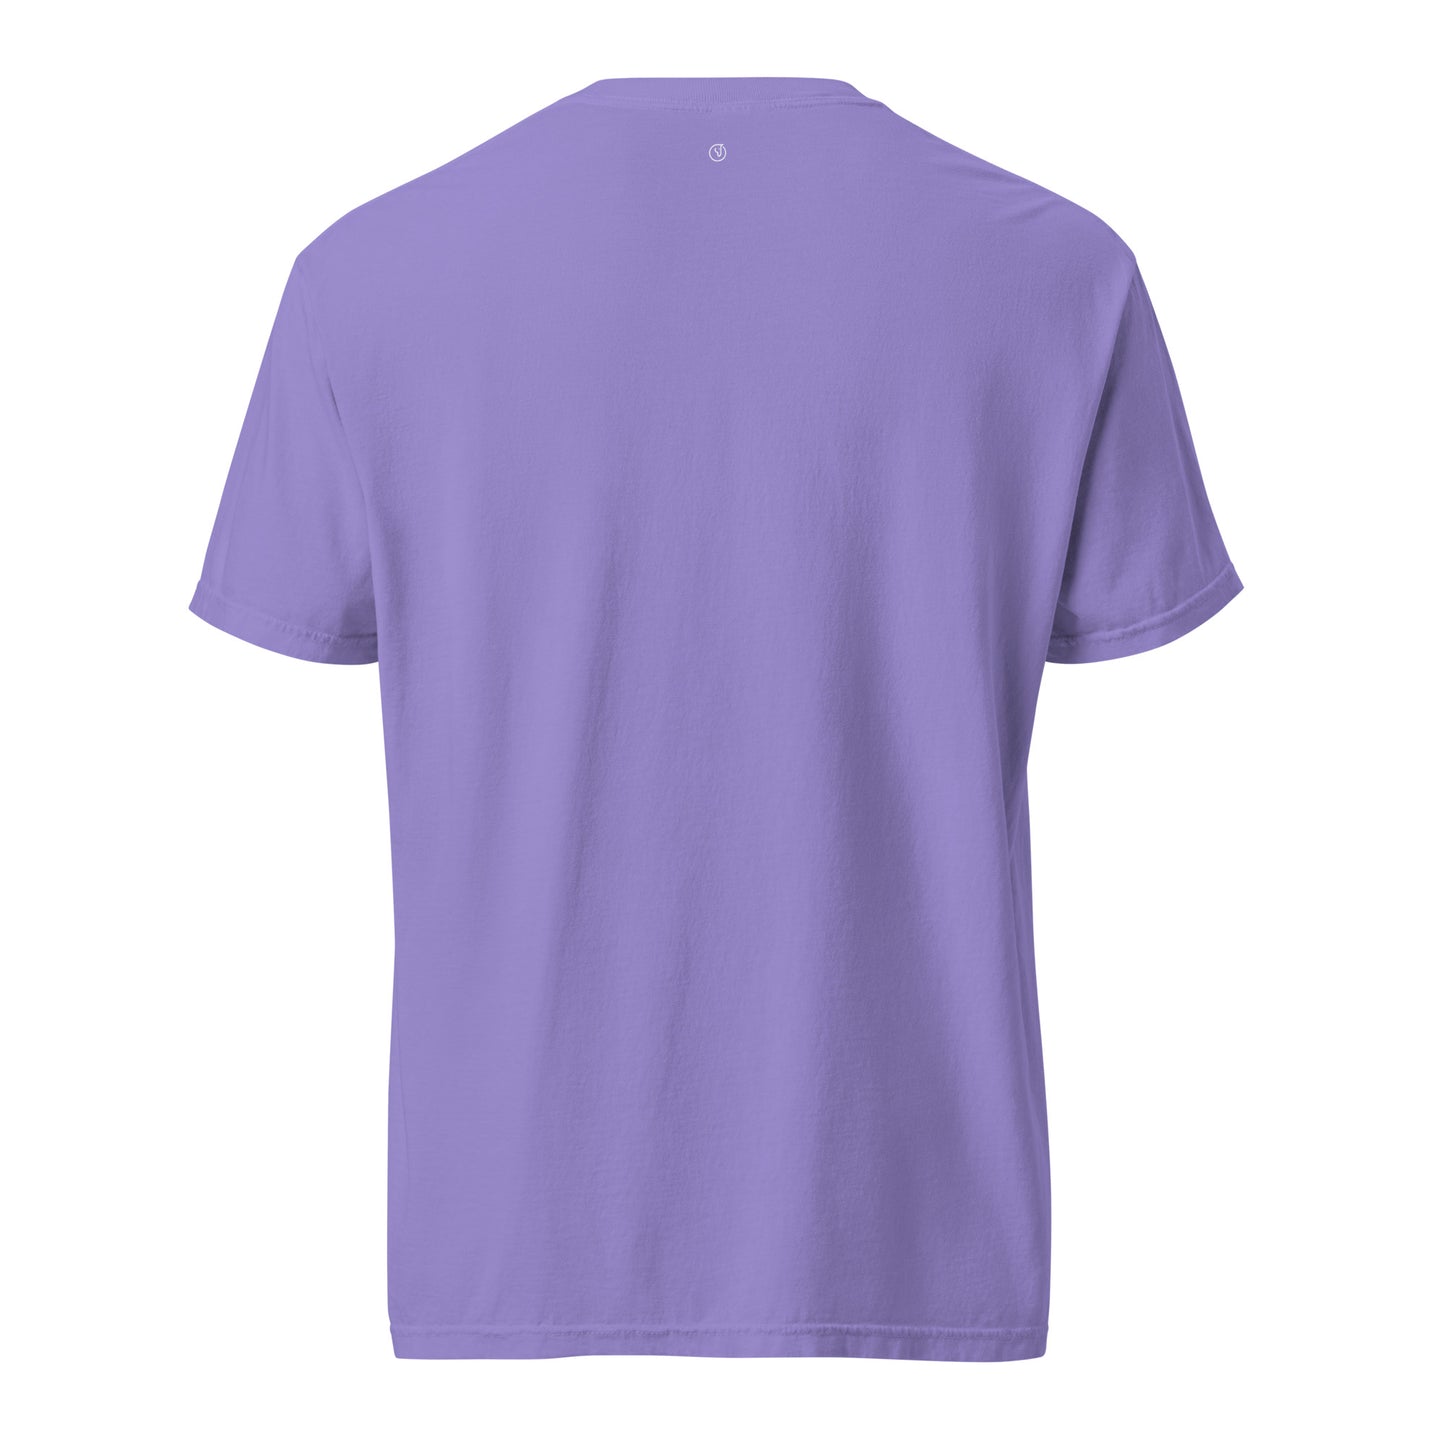 Heavyweight garment dyed runner's t-shirt with 100% cotton, Humble Sportswear men's t-shirts